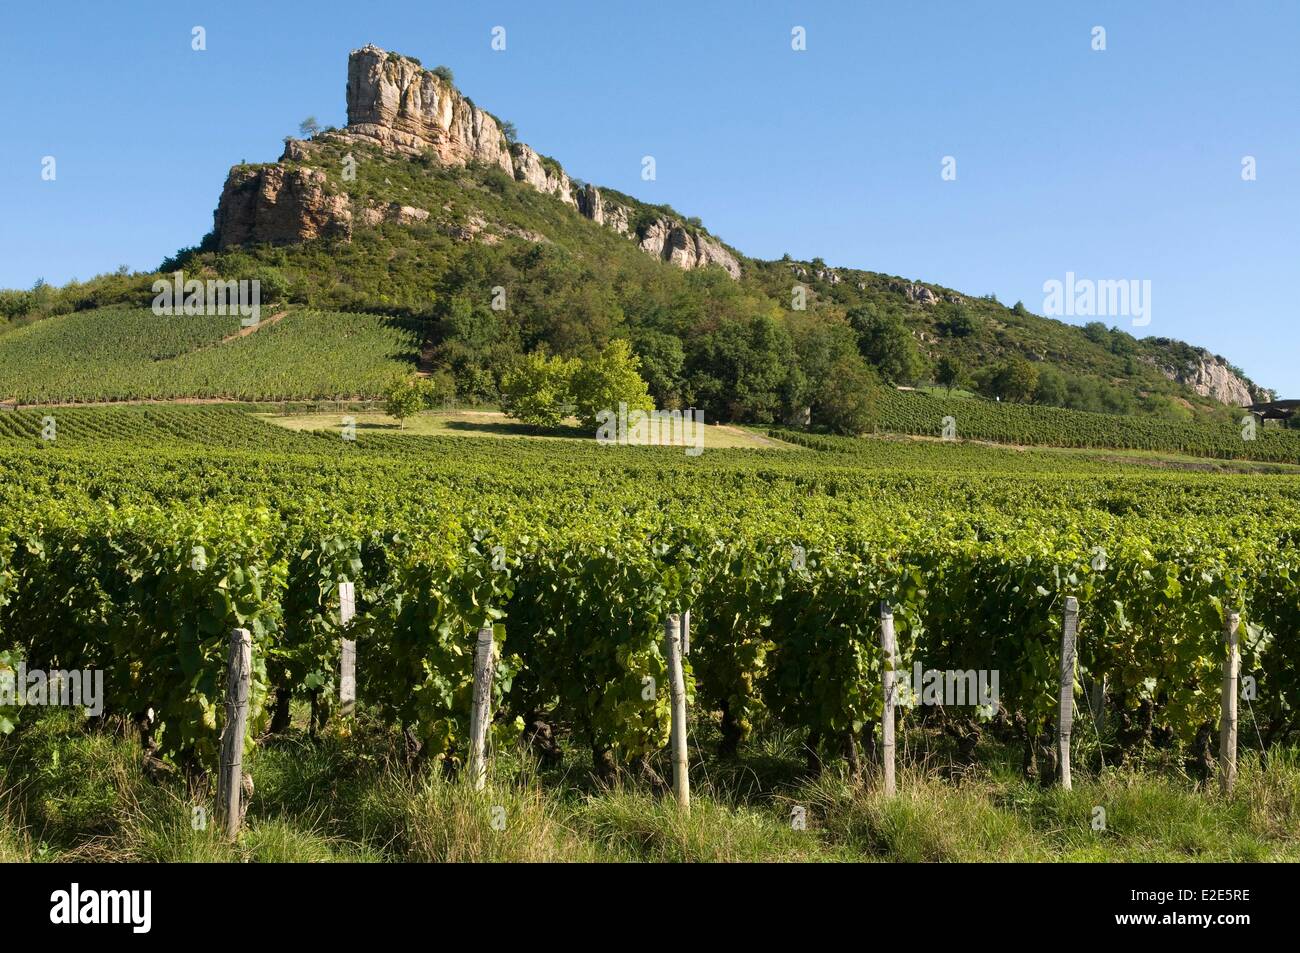 France, Saone et Loire, Solutre Pouilly, Solutre rock, Macon vineyard Stock Photo